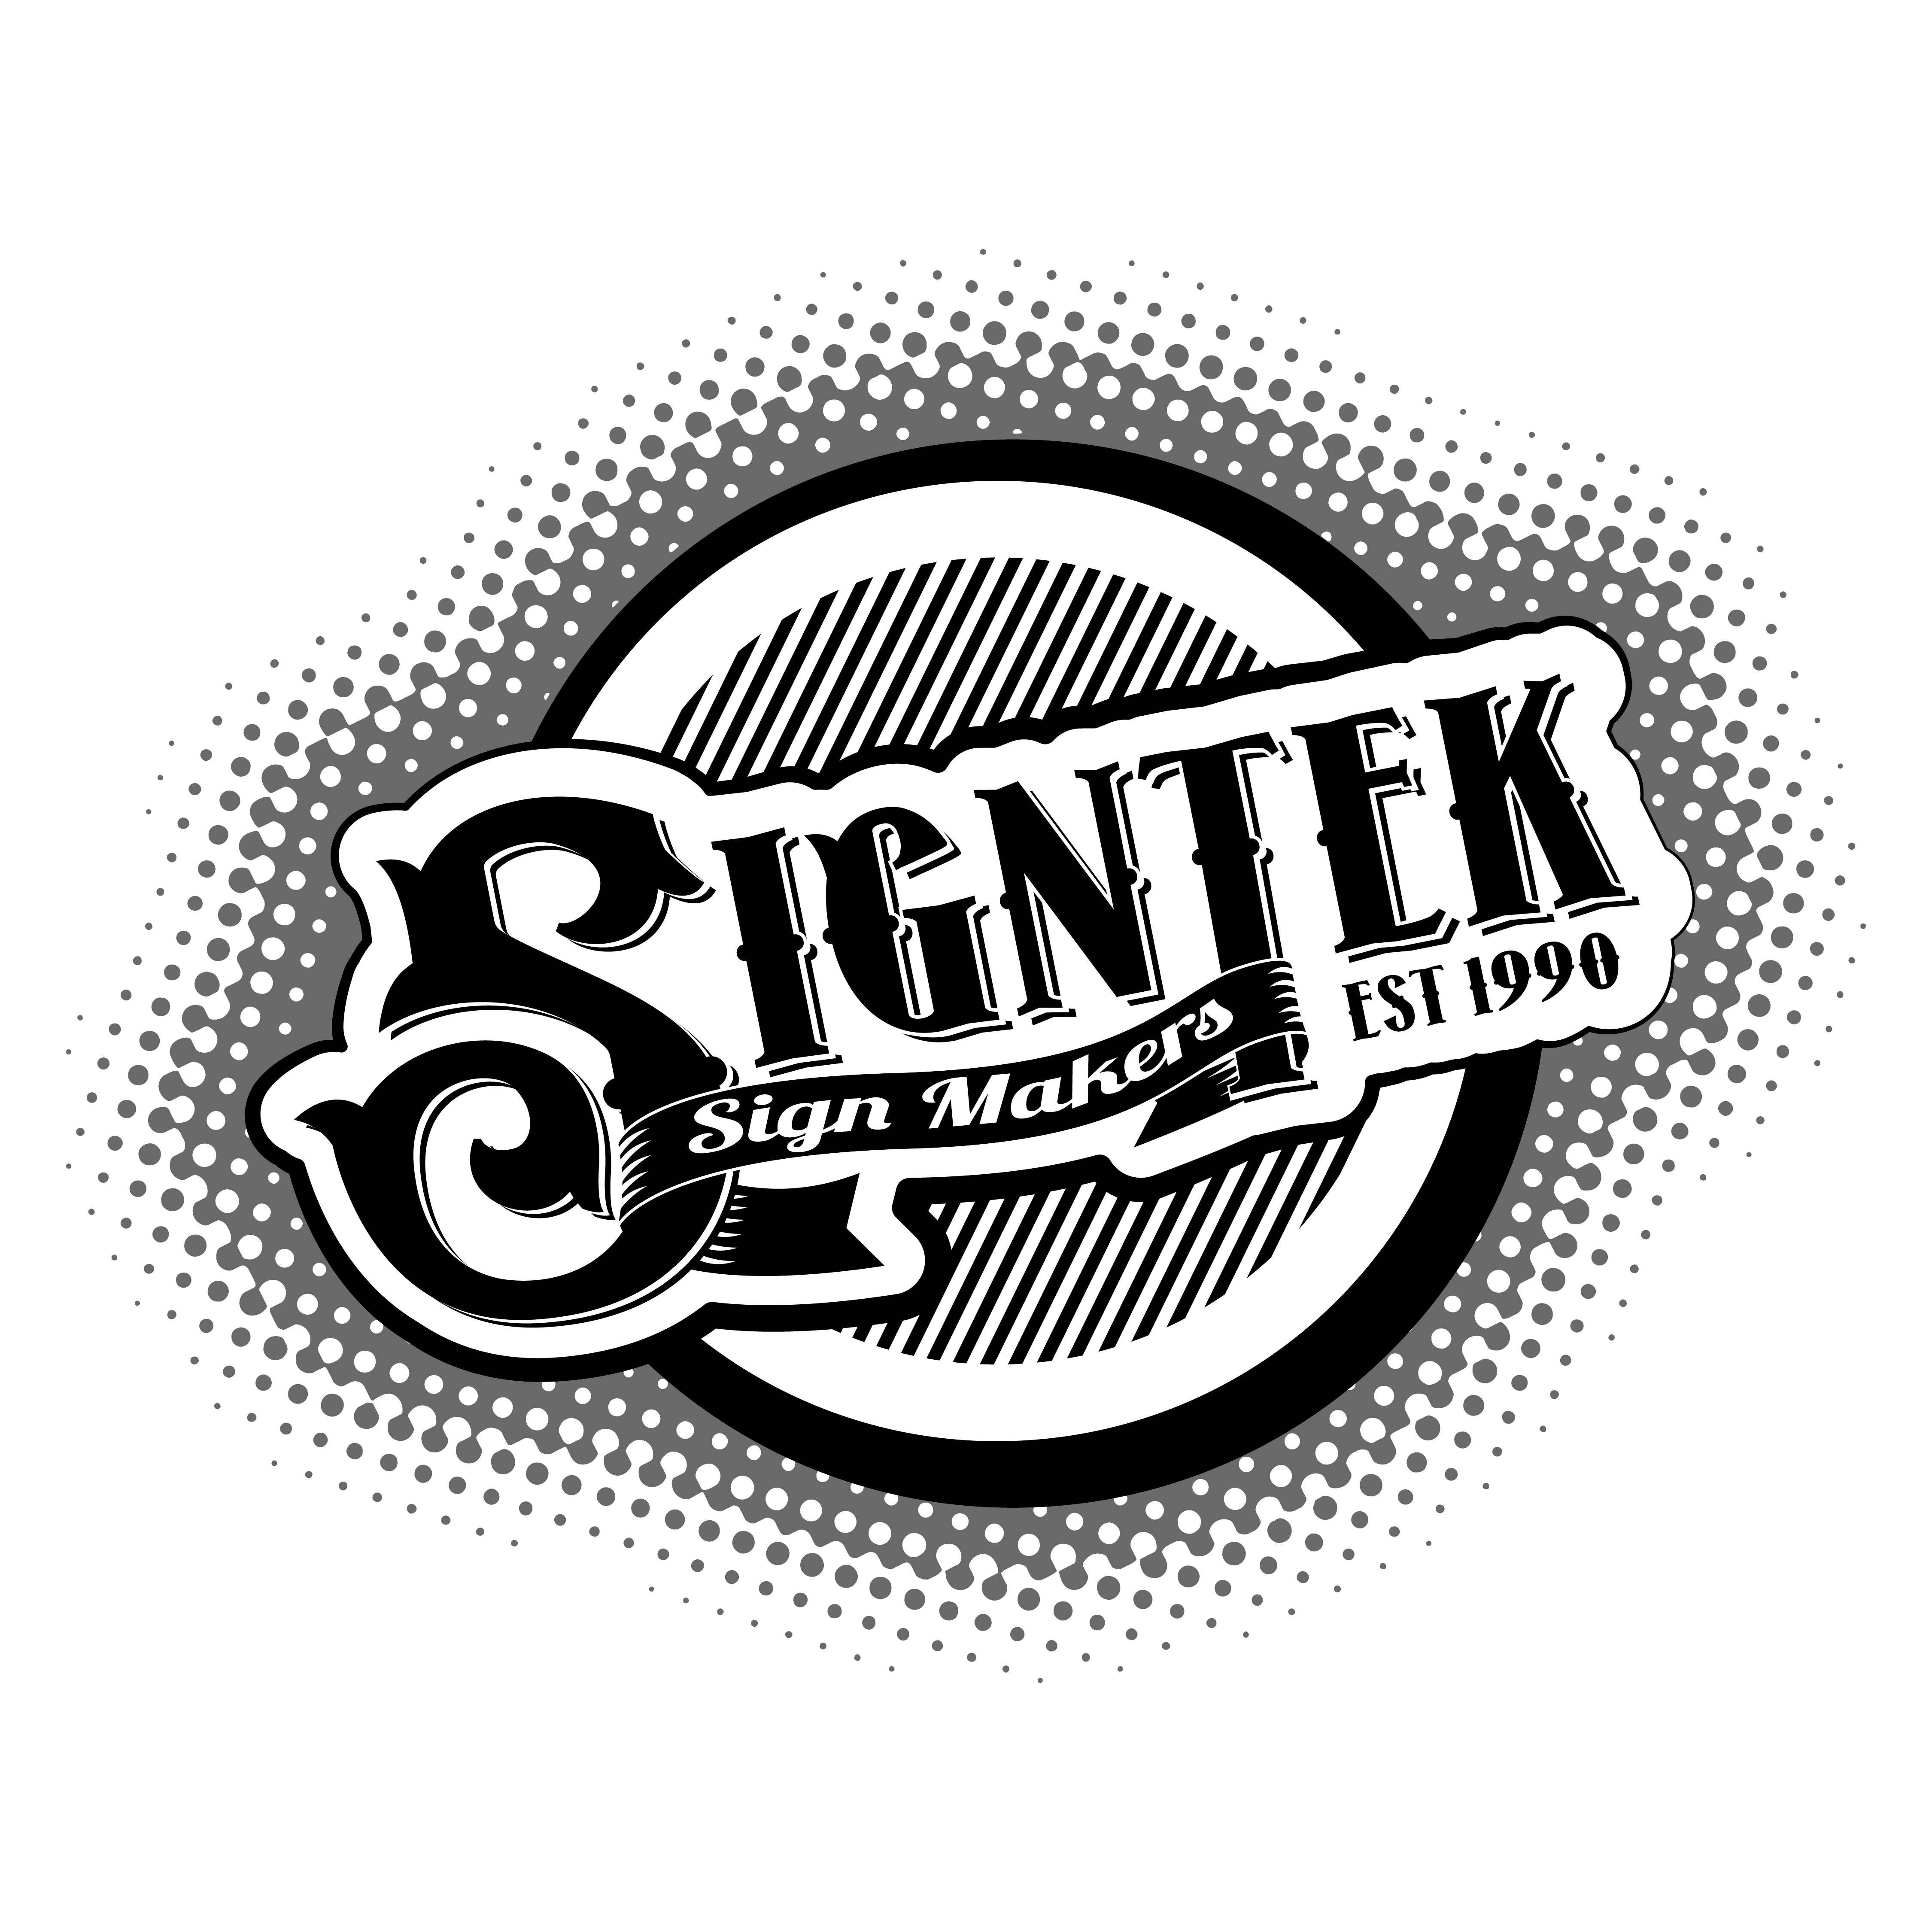 Signtek Logo